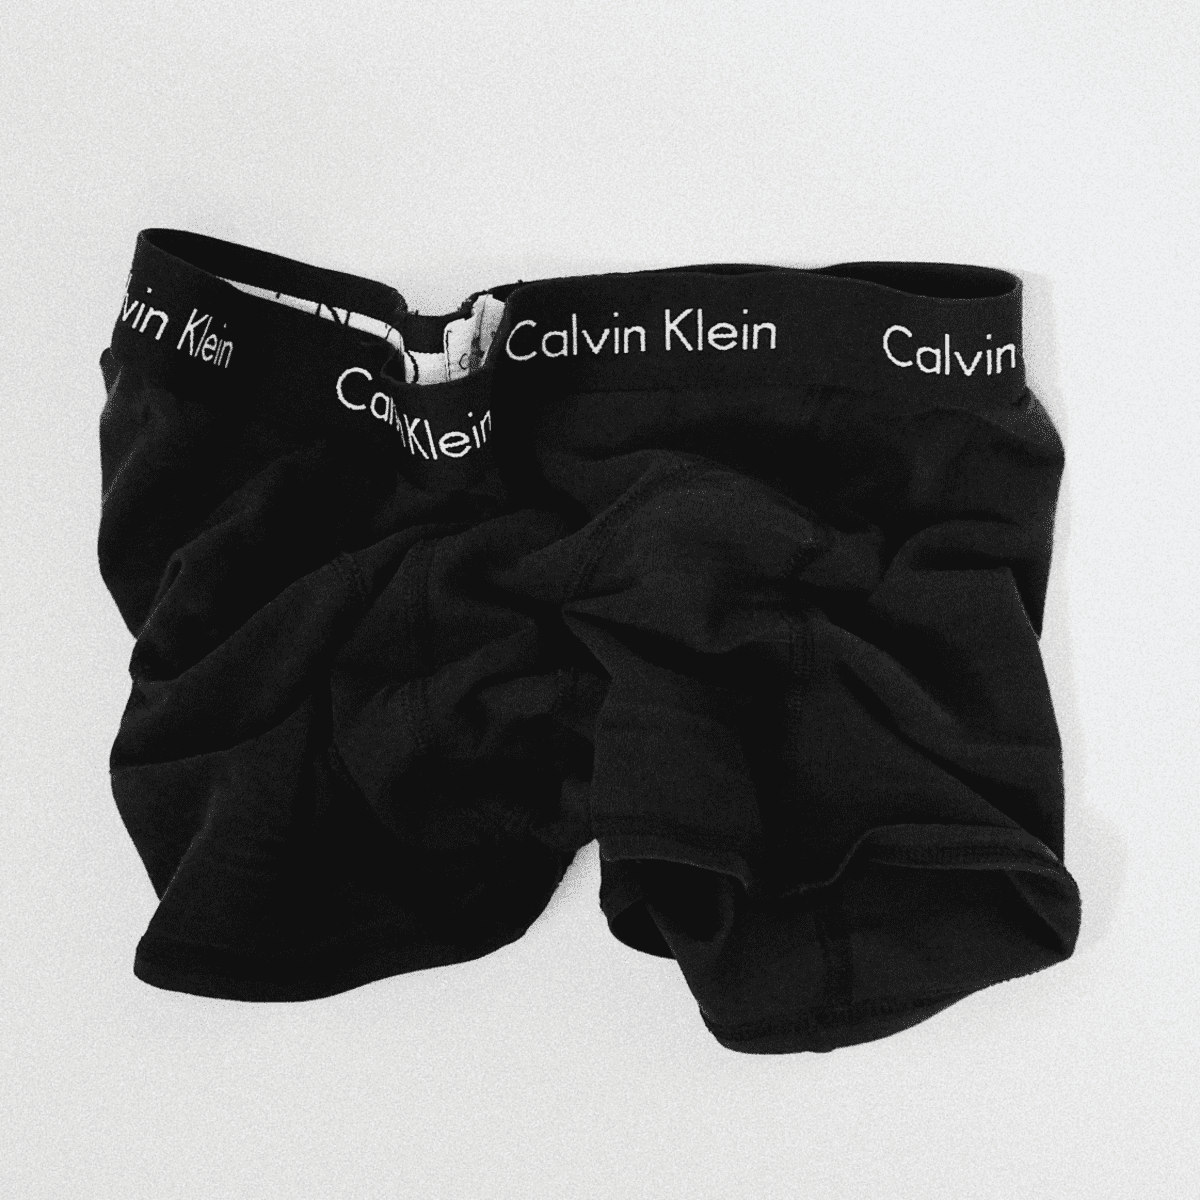 Which Type of Men's Underwear Should I Wear? 8 Common Styles - Bellatory